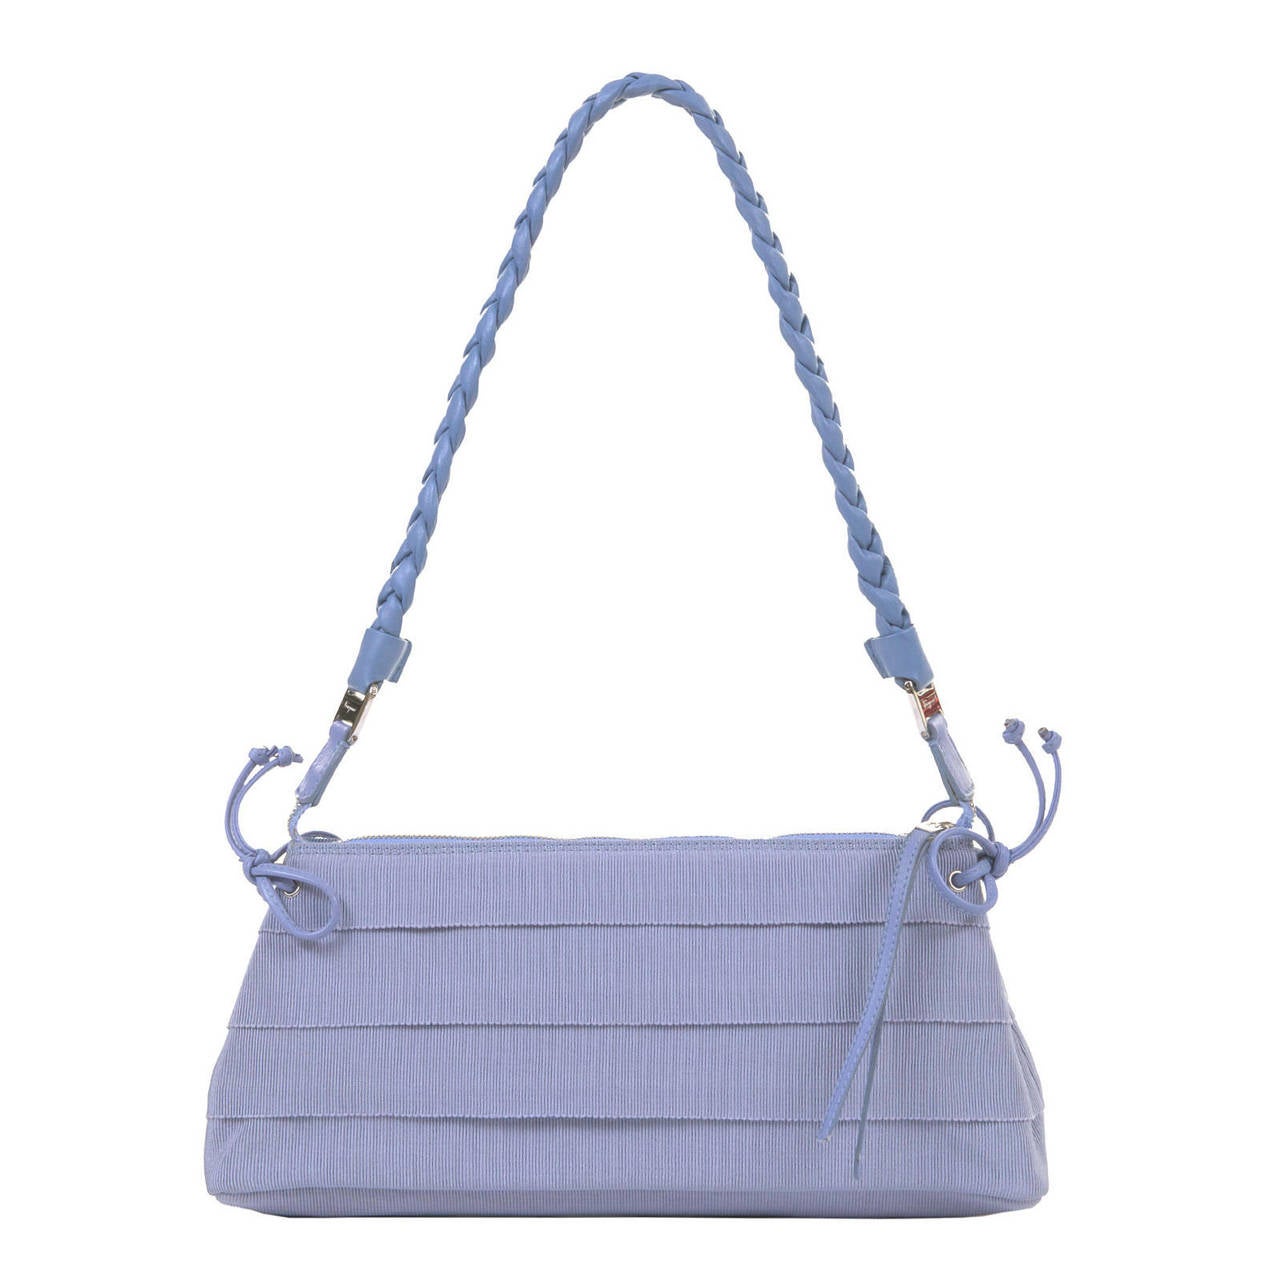 A Cute Ferragamo Clutch/Shoulder Bag in Lavender Toile and Matching ...